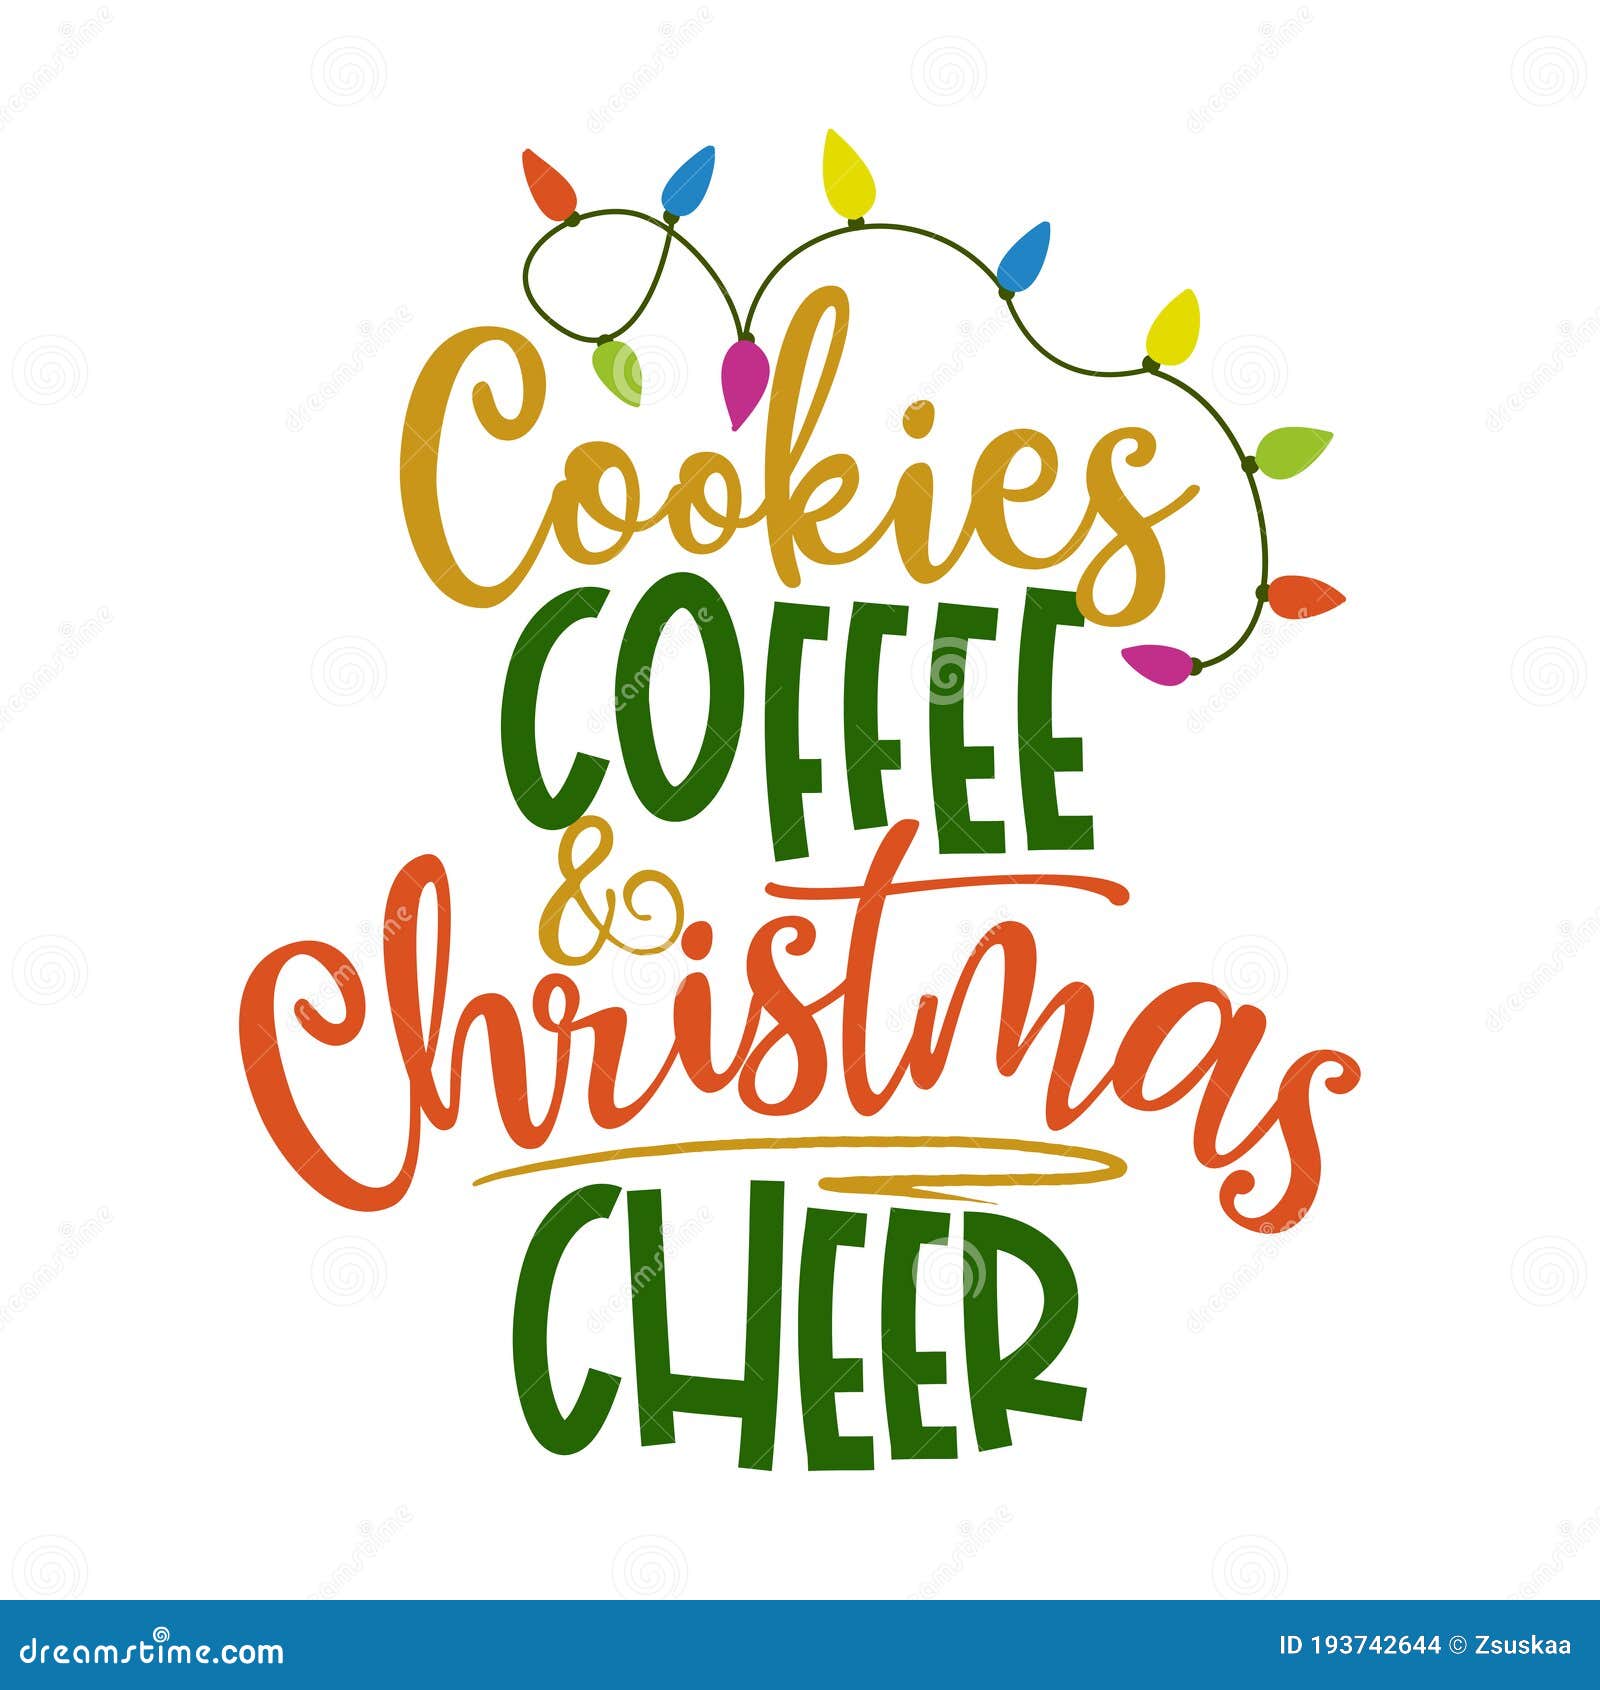 cookies, coffee and christmas cheer